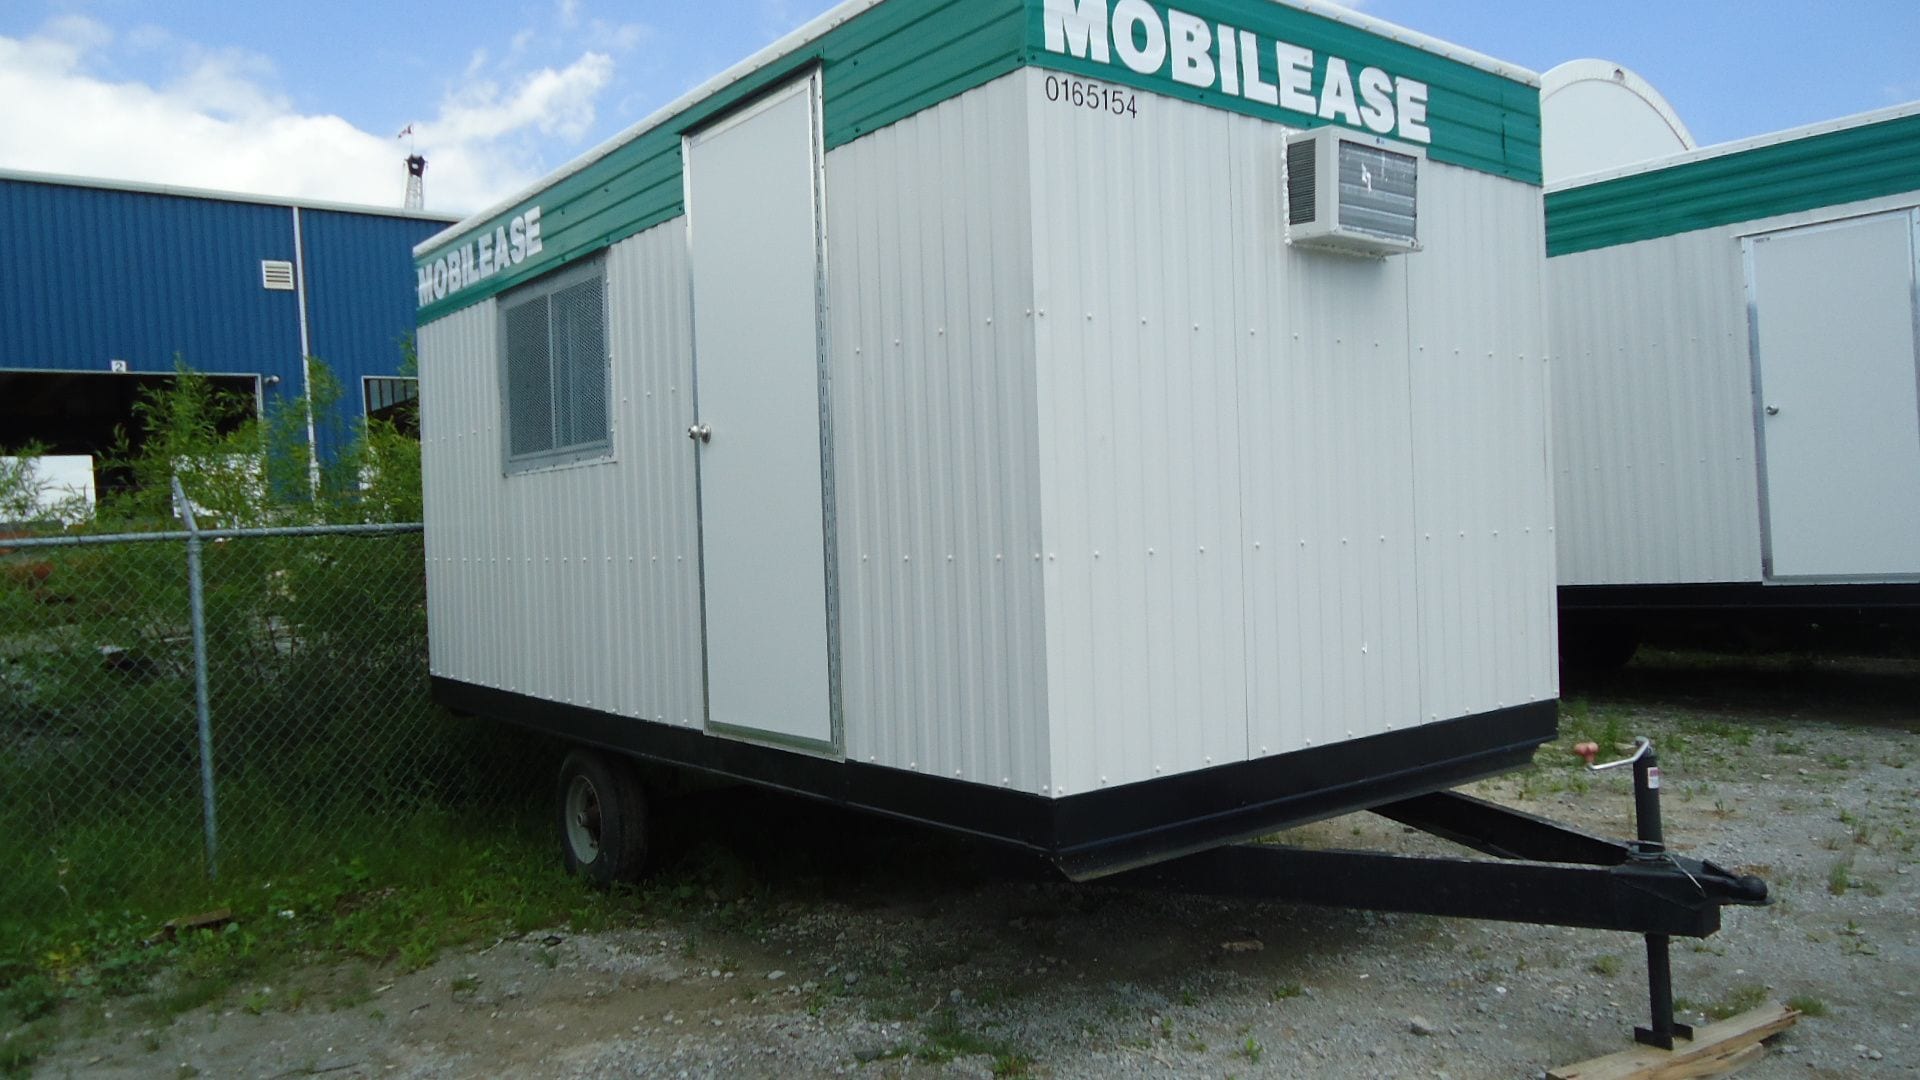 Mobilease Rentals Inc